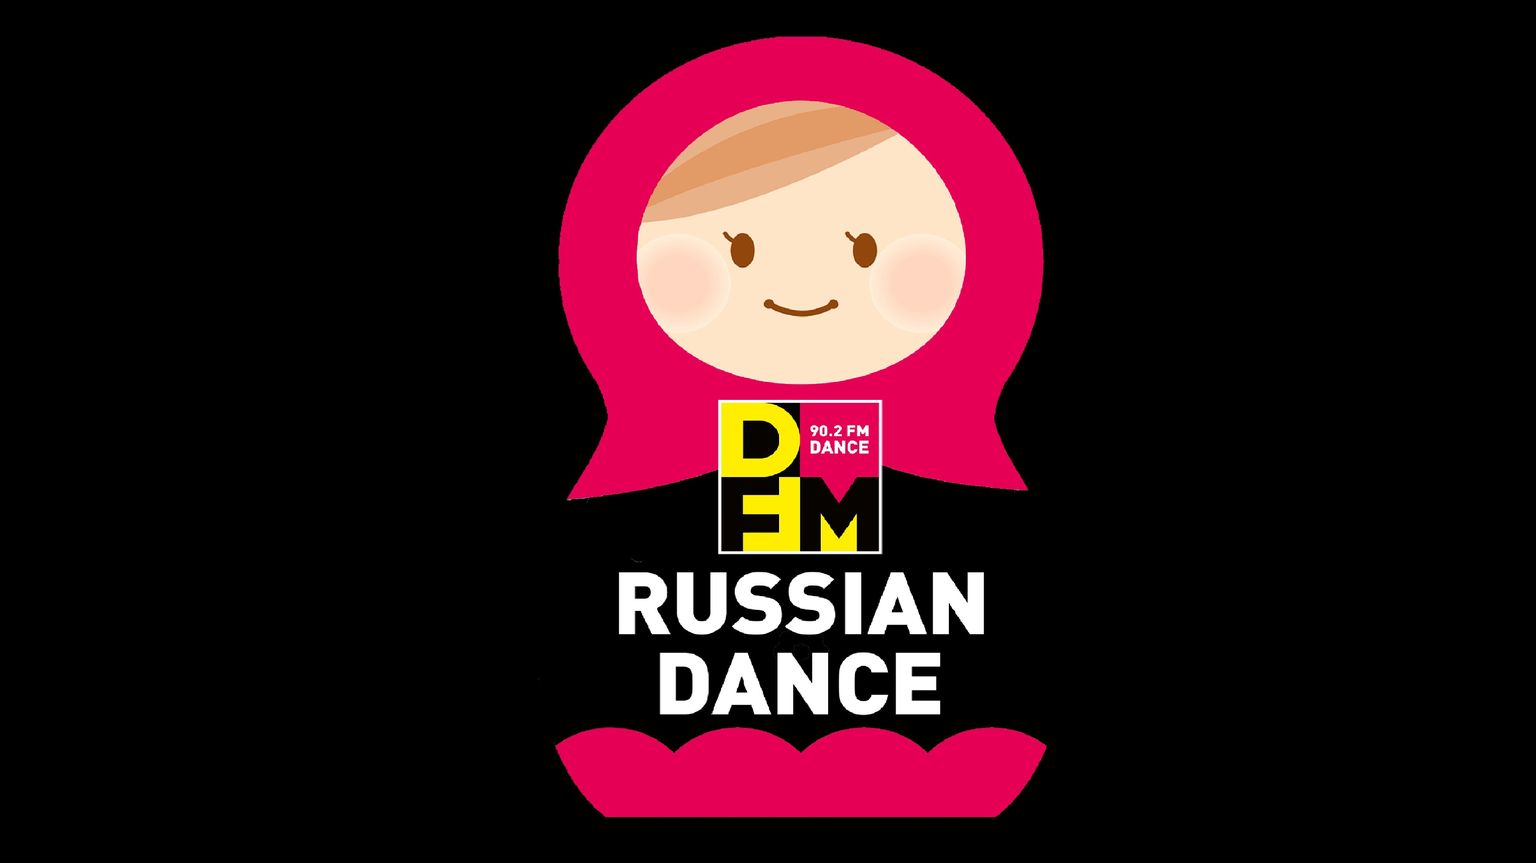 DFM Russian Dance. Радио DFM рашен дэнс. Ди фм рашен радио